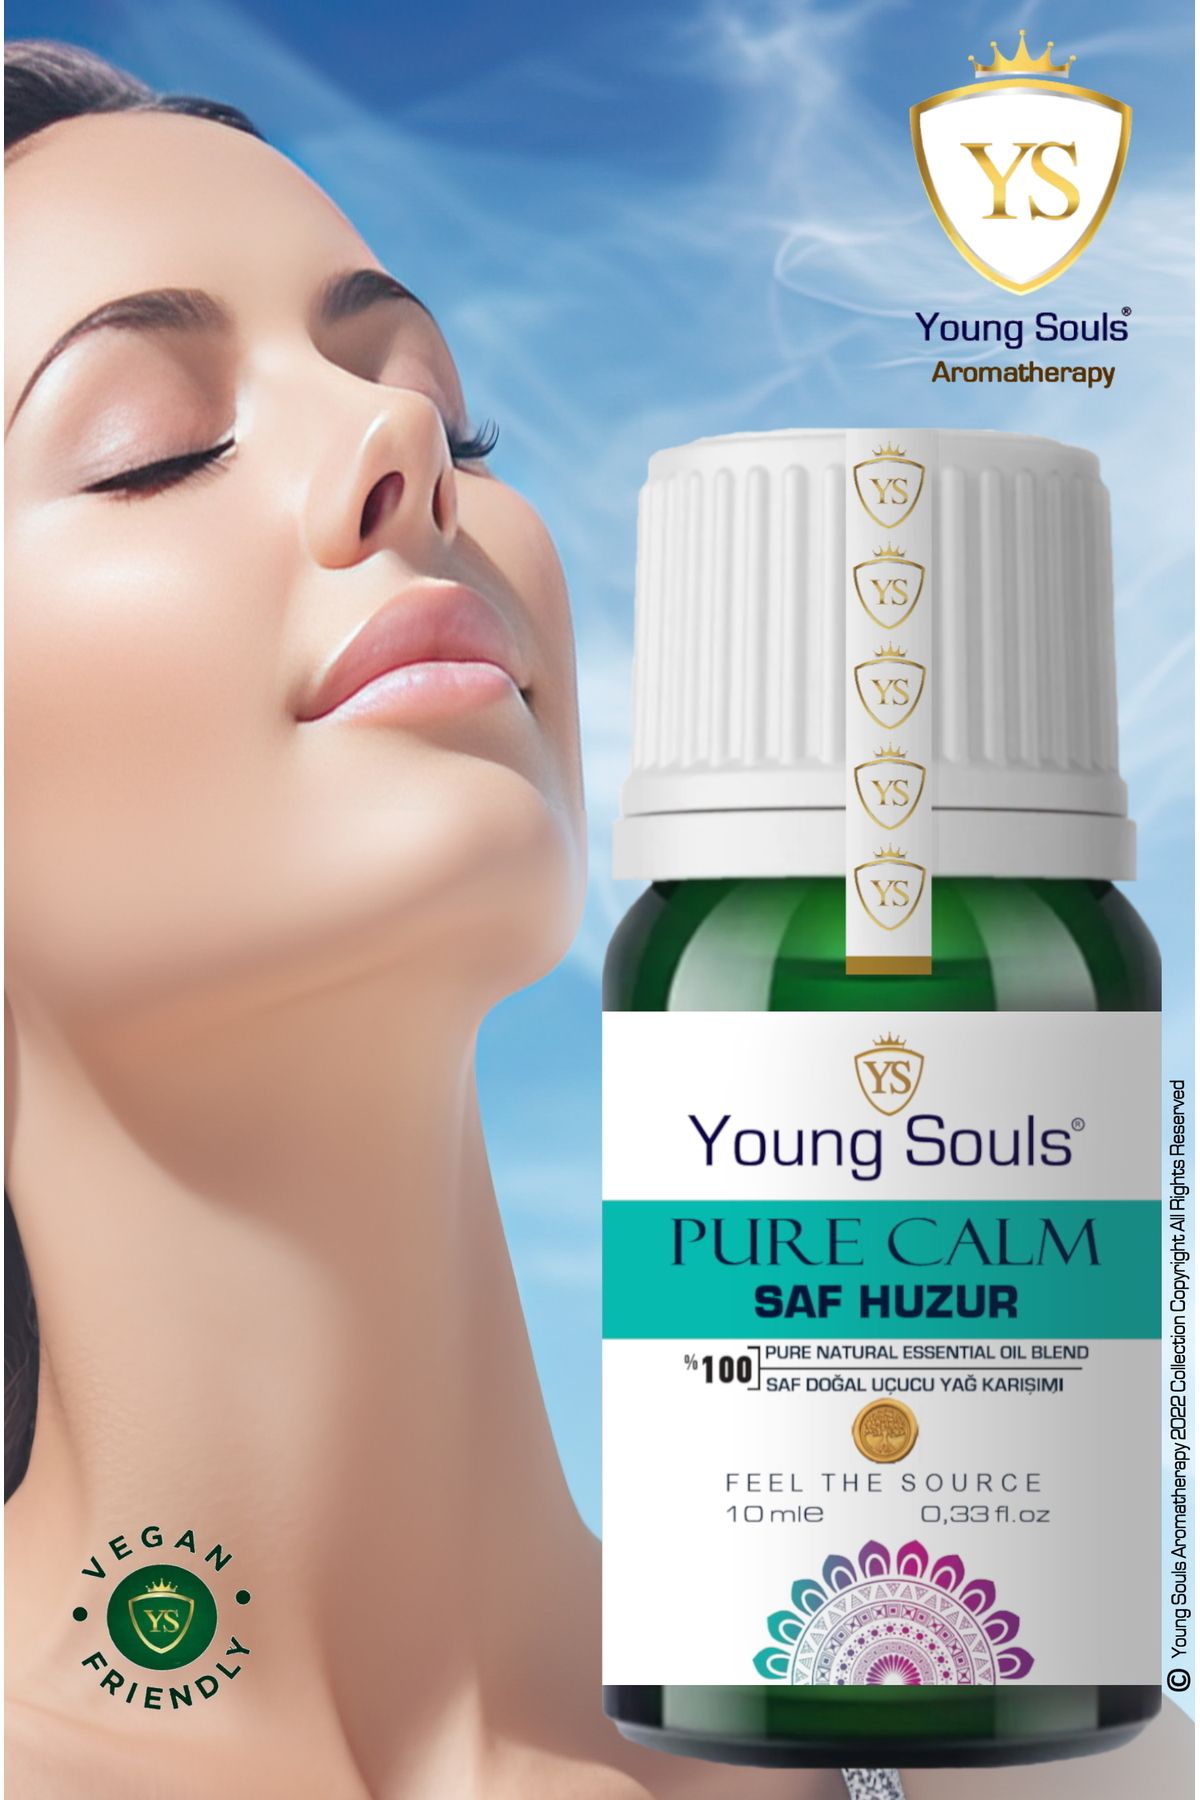 YOUNG SOULS Aromatherapy Pure Calm Essential Oil Blend Saf Huzur Uçucu Yağ Karışımı 10 Ml